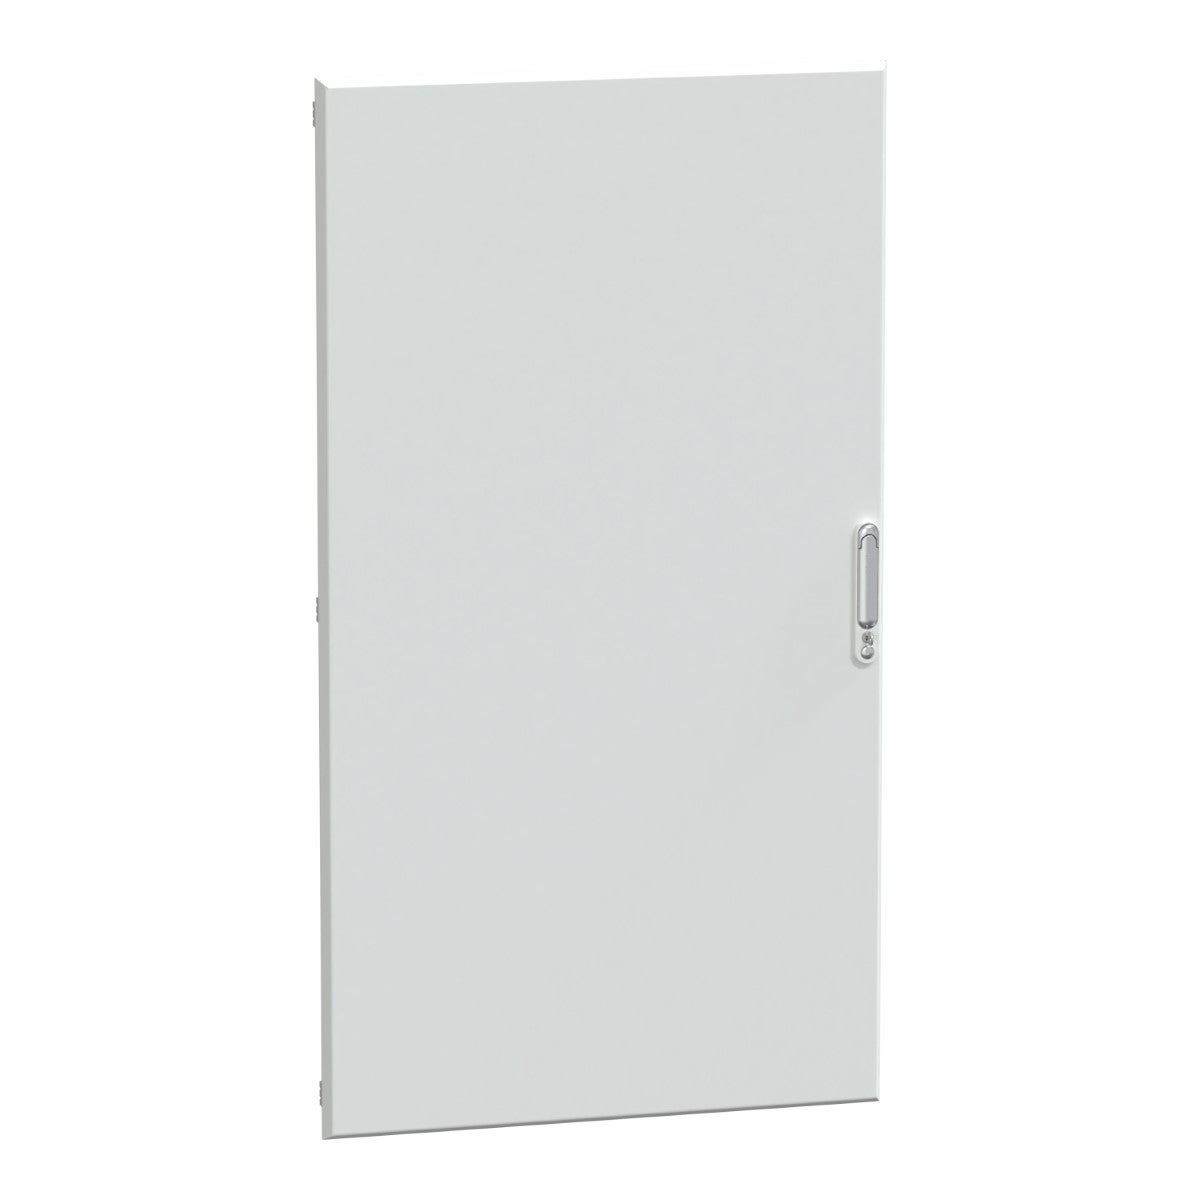 Door, PrismaSeT G, plain type for enclosure, 30M, W850, IP30/4X, white, RAL 9003